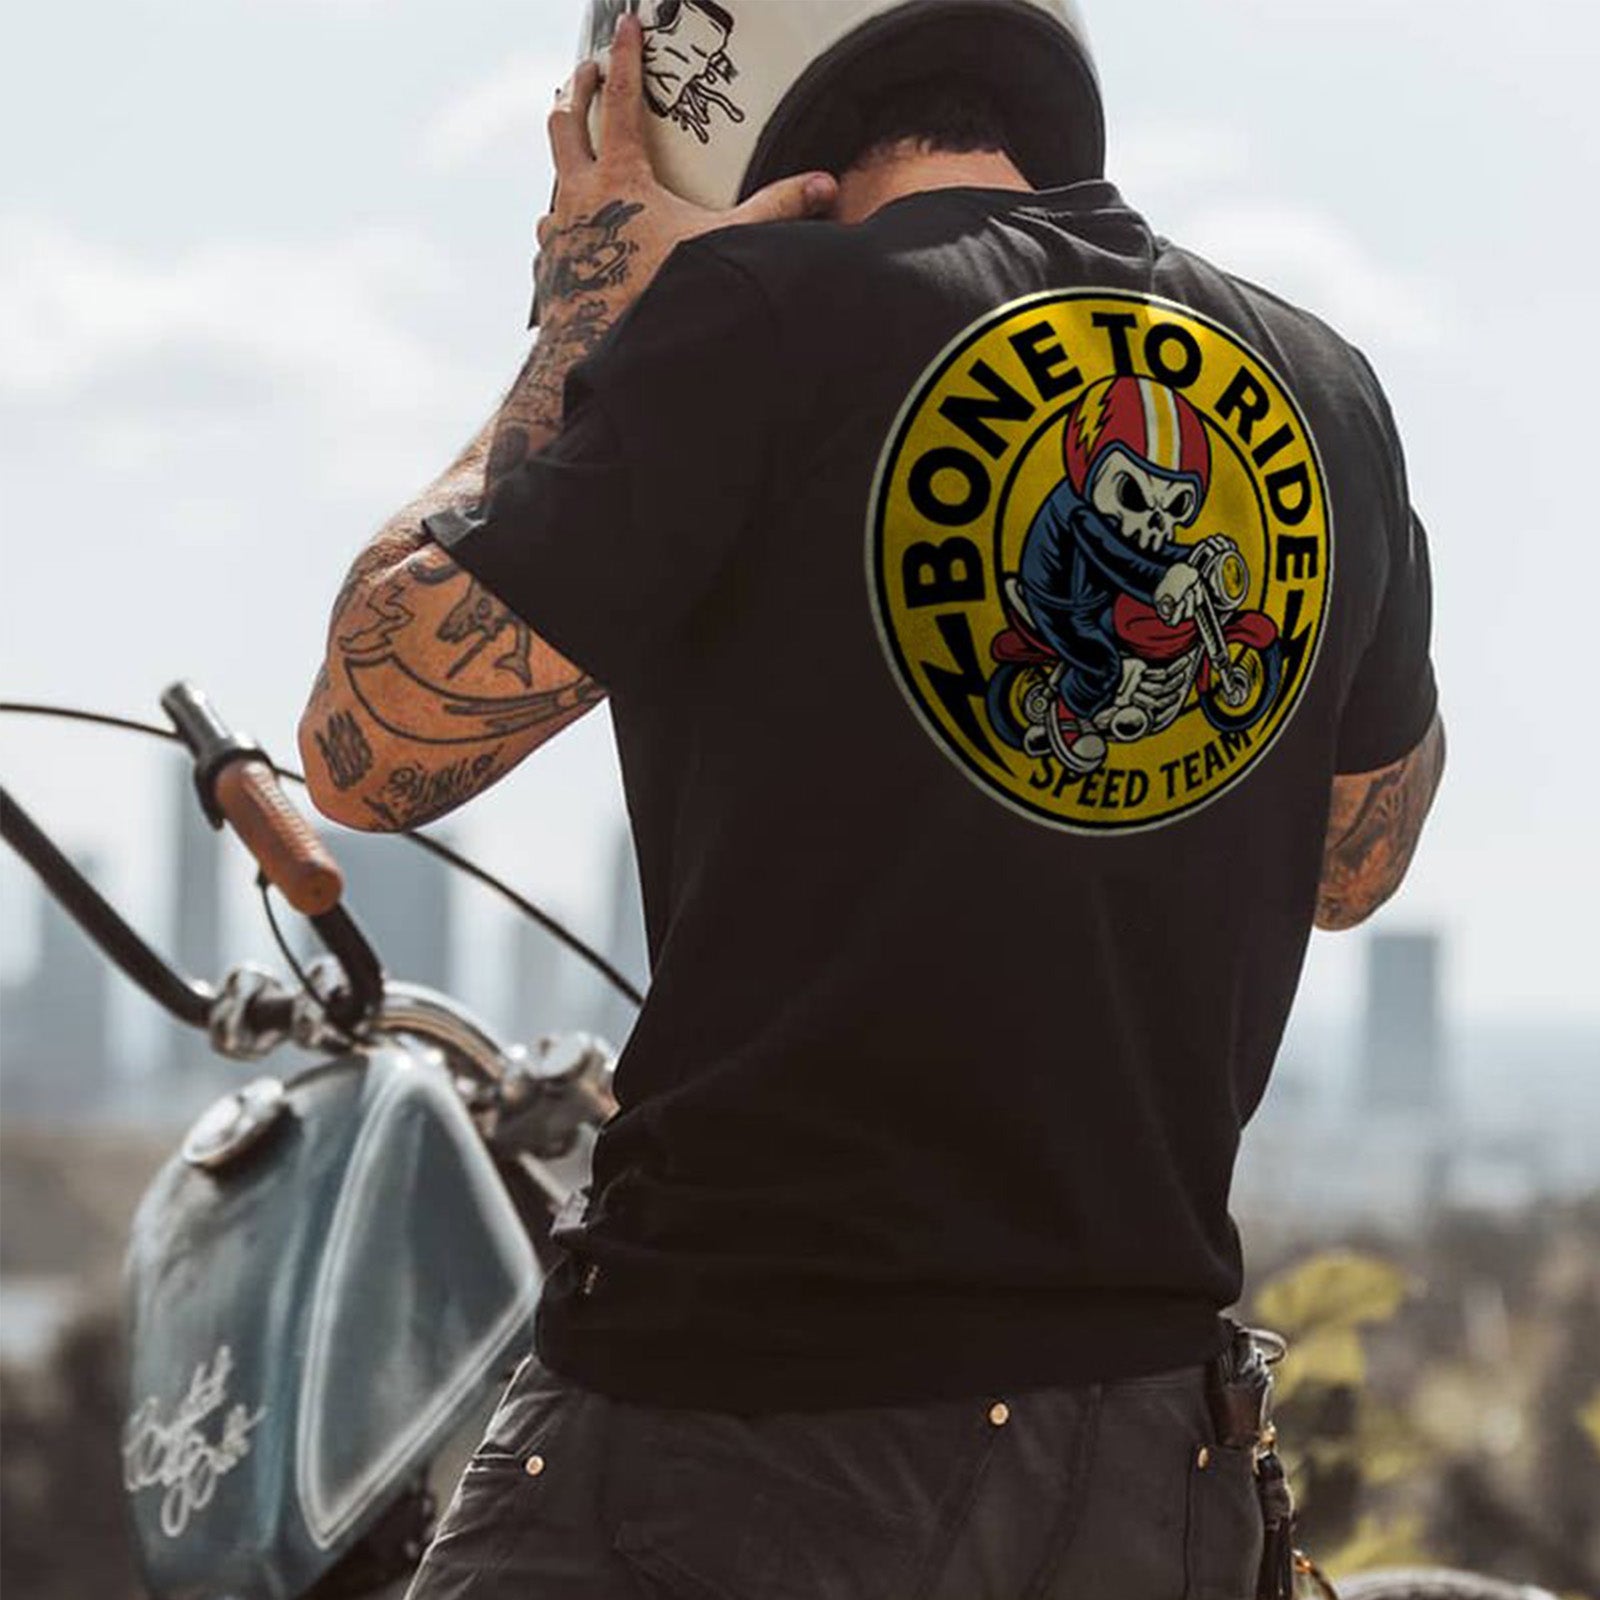 Uprandy Bone To Ride Speed Team Skull Graphic T-Shirt - chicyea